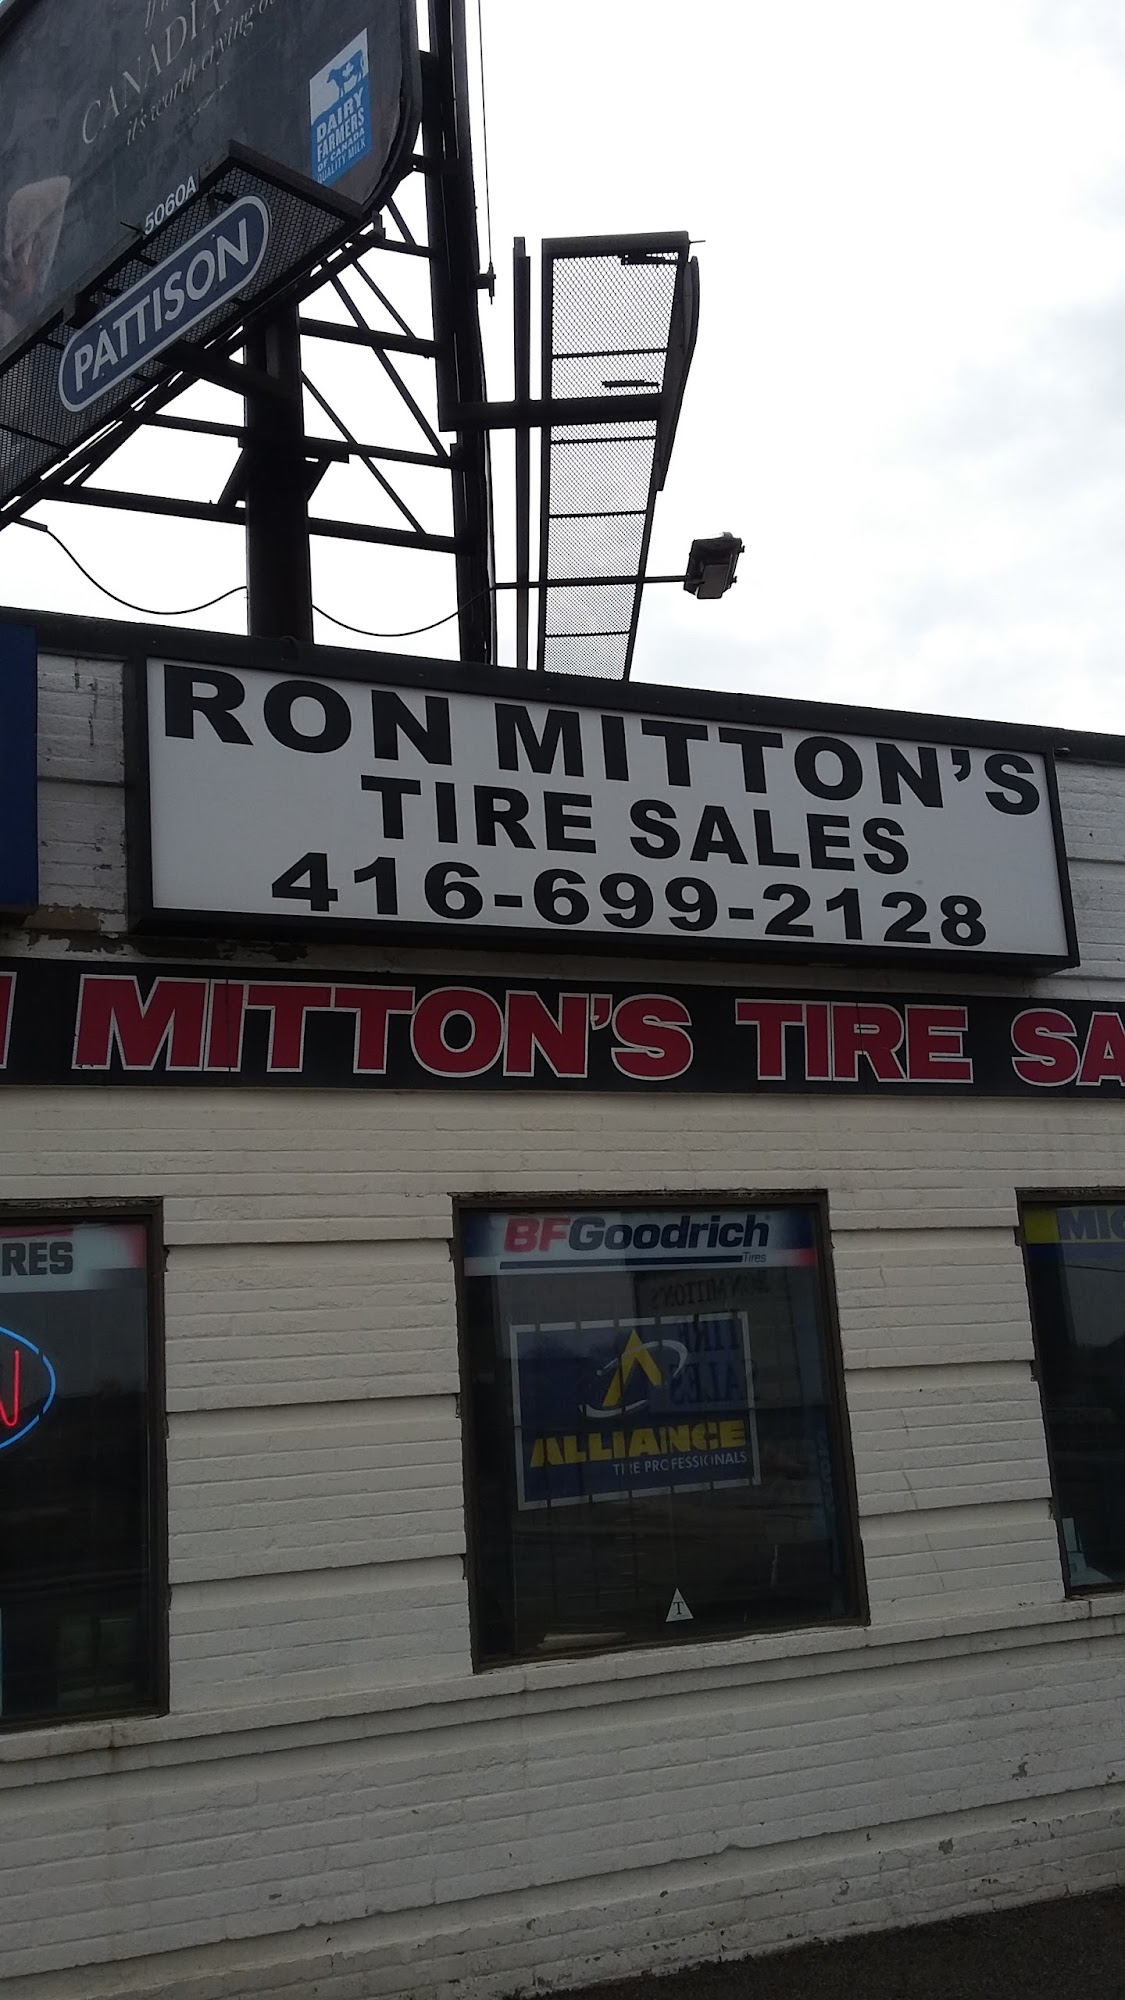 Ron Mitton's Tire Sales